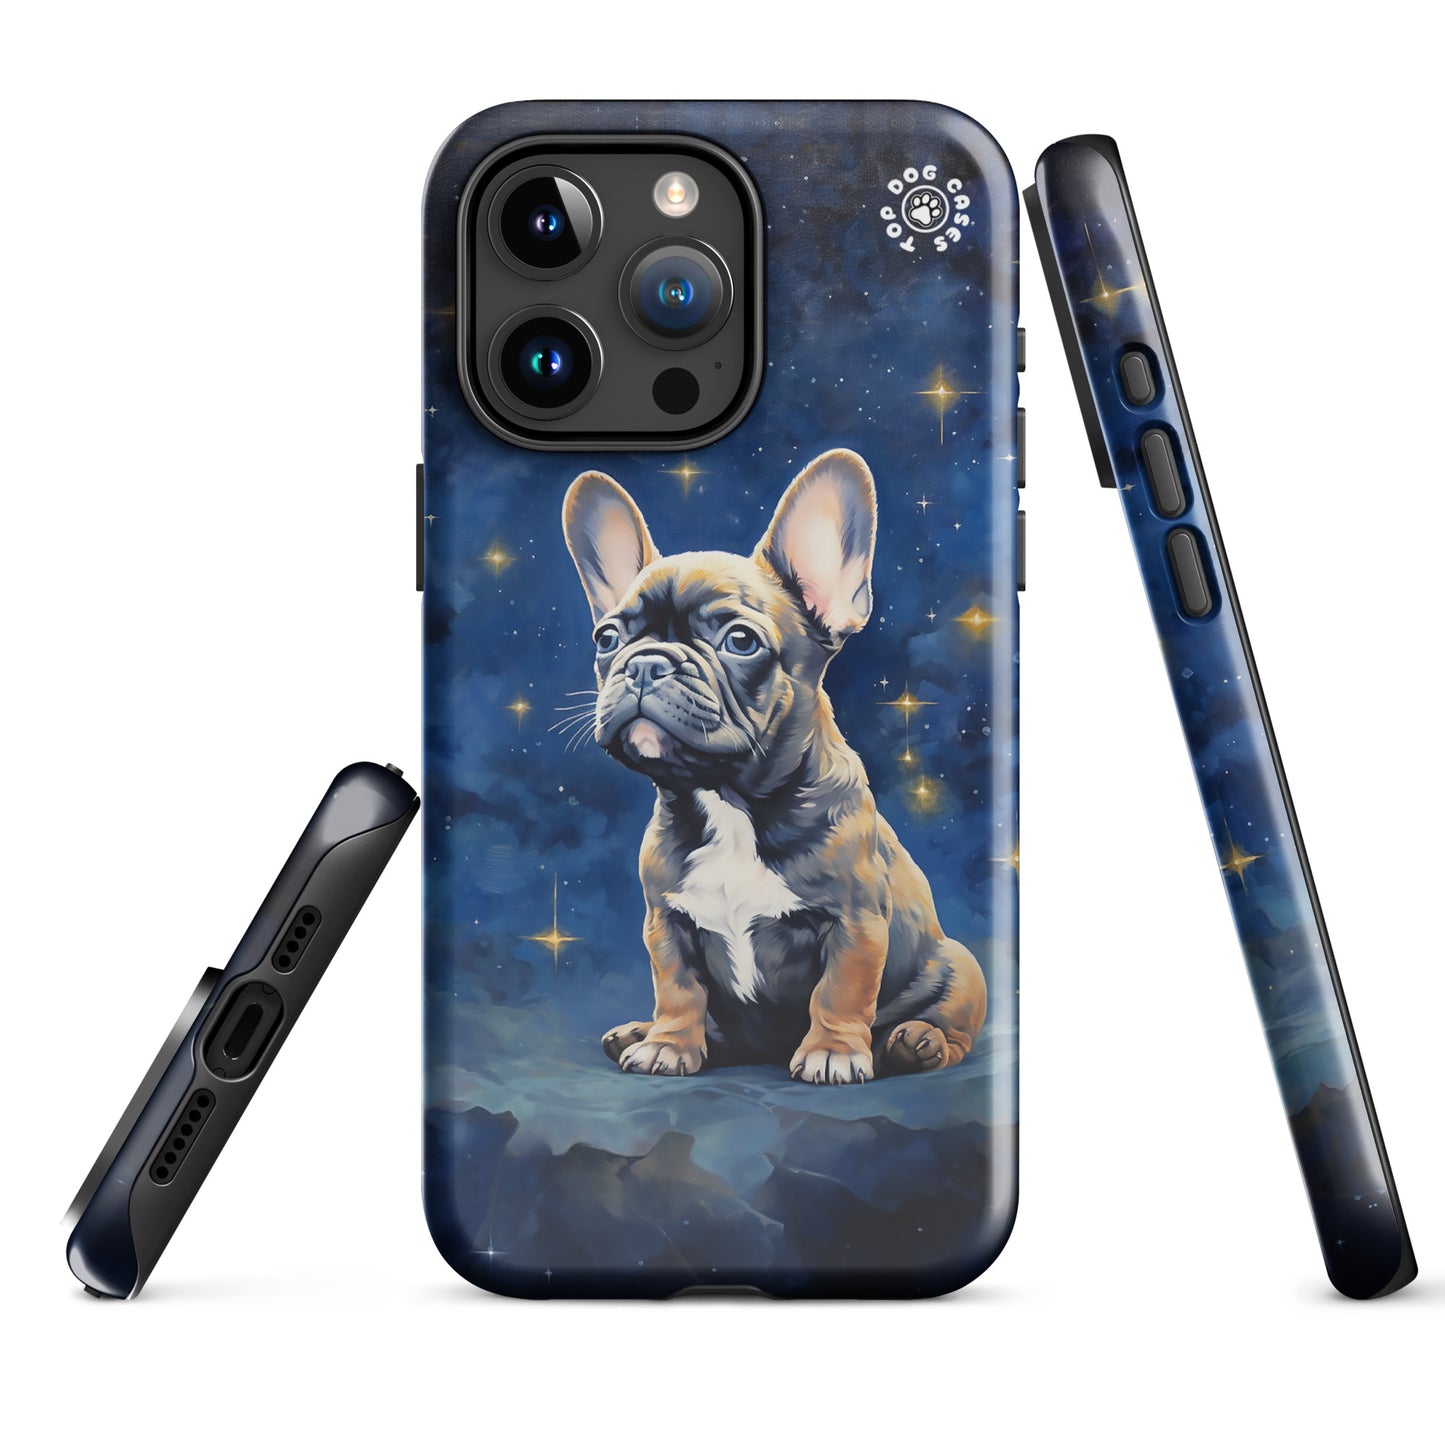 French Bulldog - iPhone Case - Cute Phone Cases